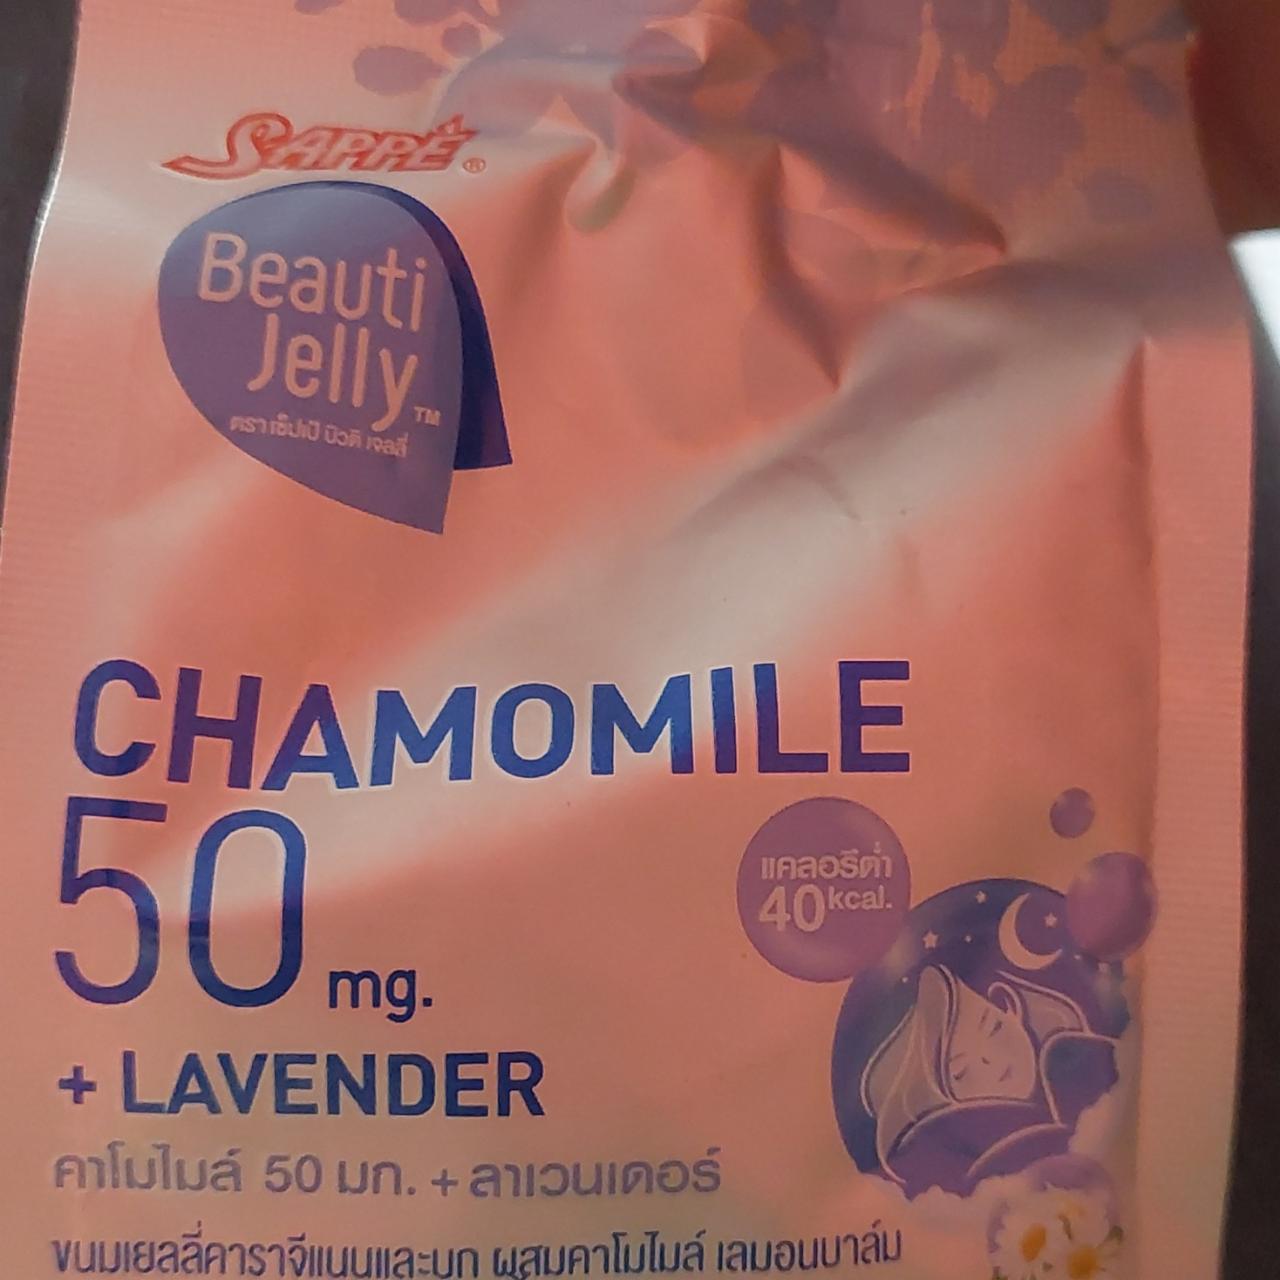 Fotografie - Beauti Jelly Chamomile 50mg + Lavender Sappe